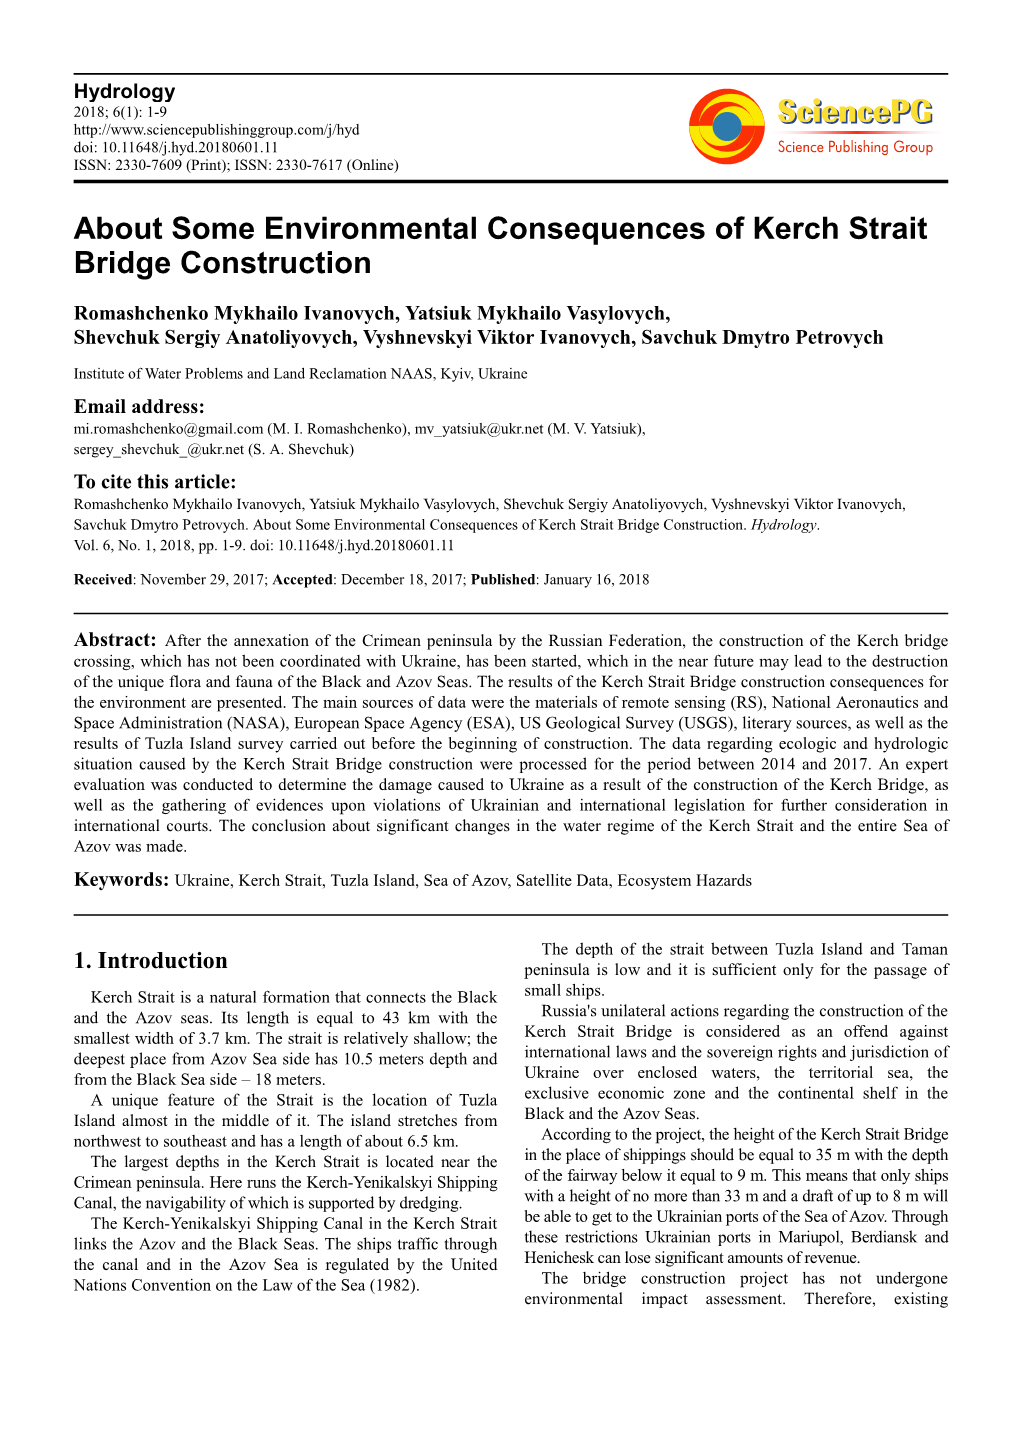 About Some Environmental Consequences of Kerch Strait Bridge Construction